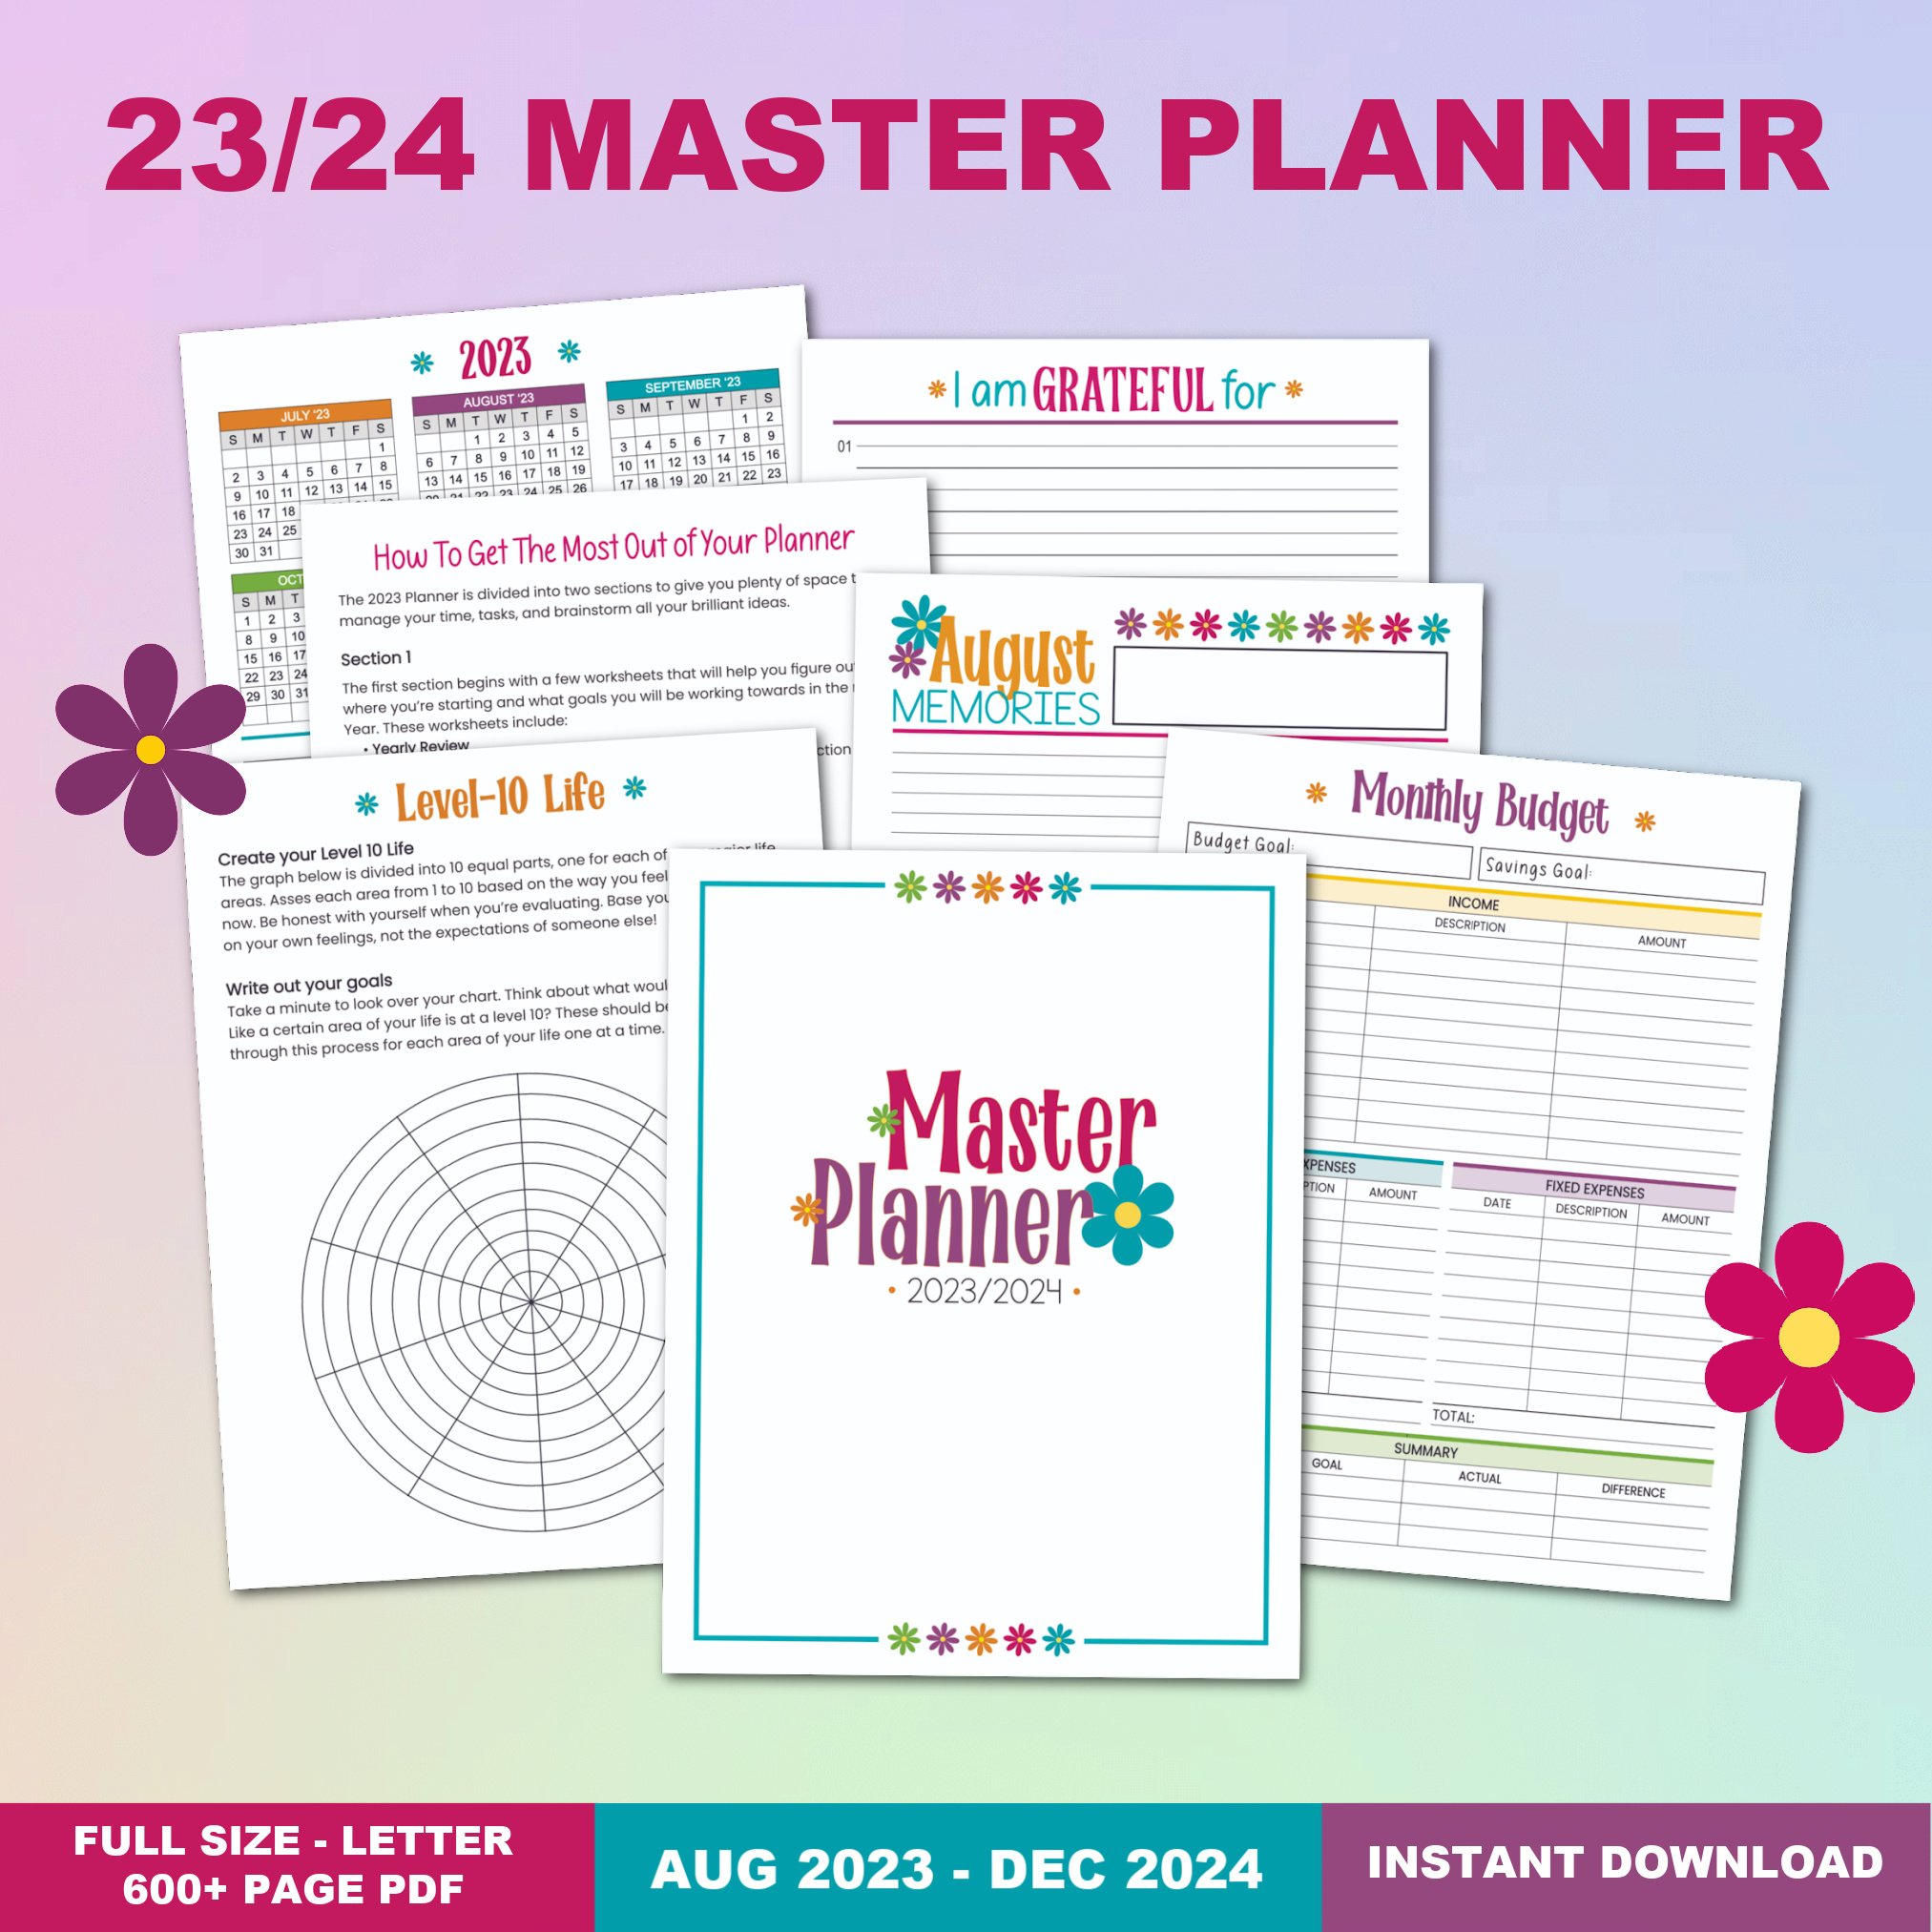 2023/2024 Master Planner